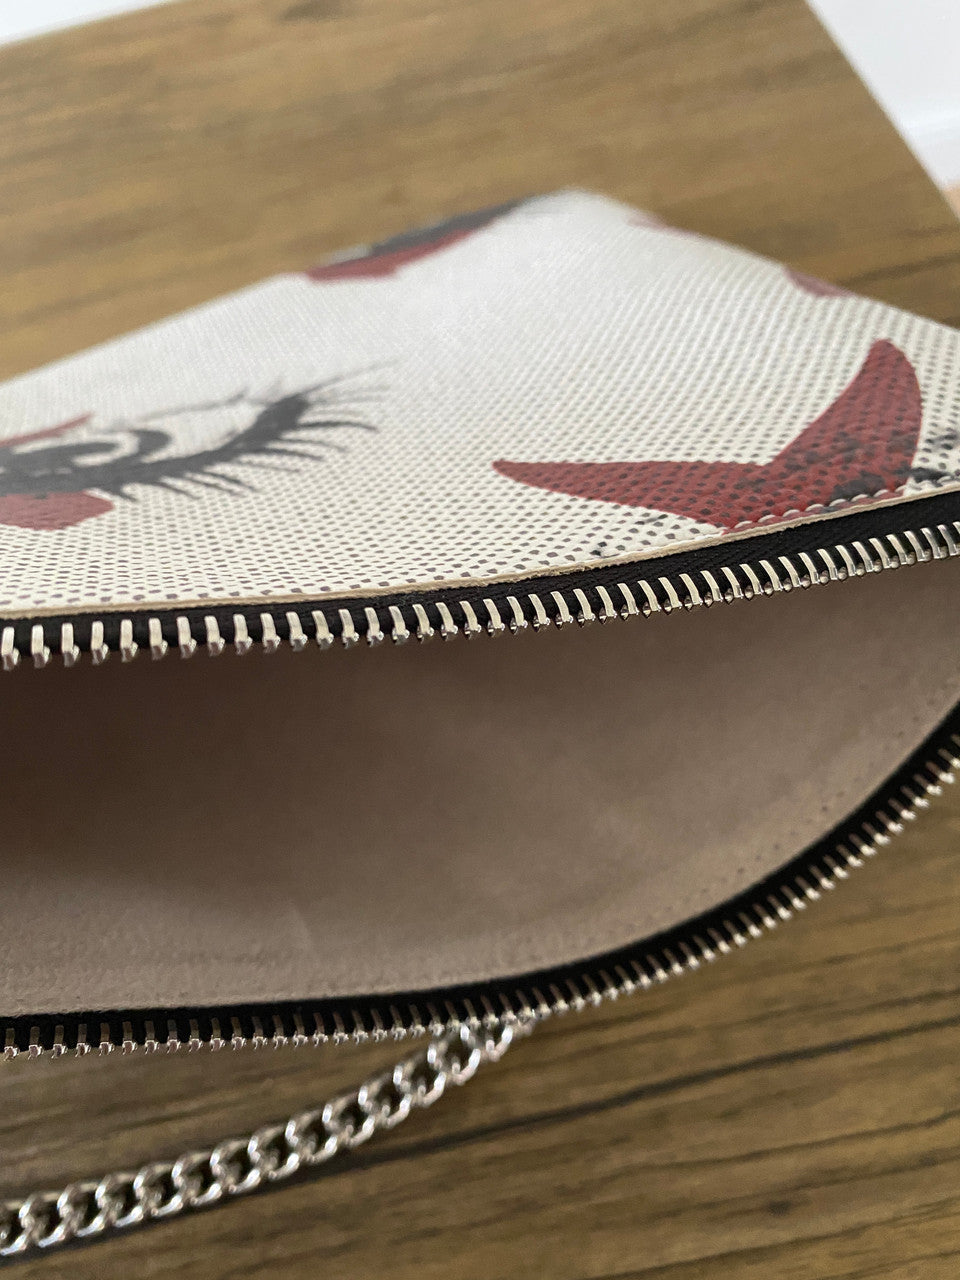 Eye Print Handmade Faux Leather Bag - Moira Rose Style Schitt's Creek Inspired - Purse - Handmade Unique - Gift Idea Chain